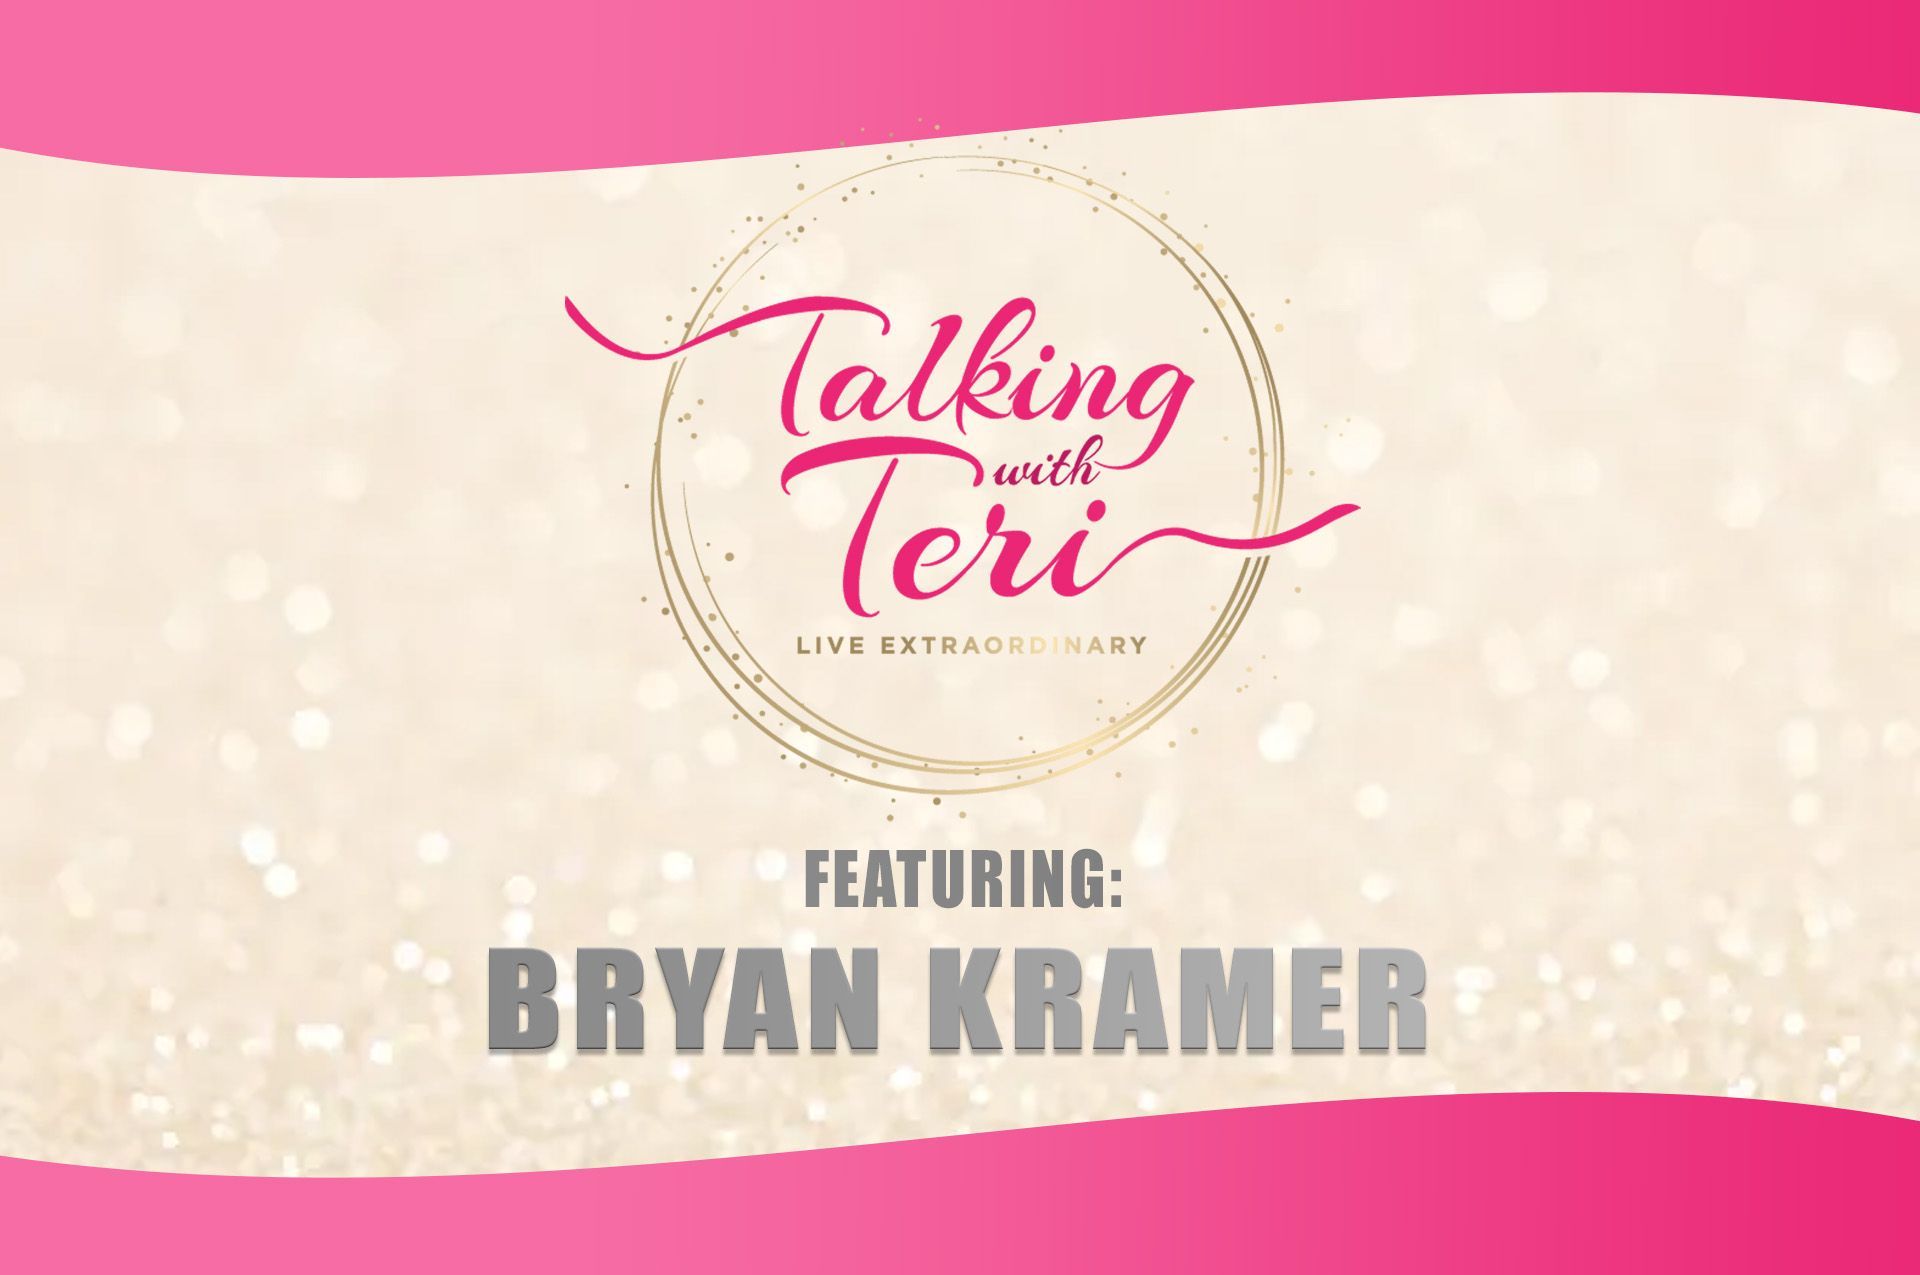 Teri Talks with Bryan Kramer | Talking with Teri